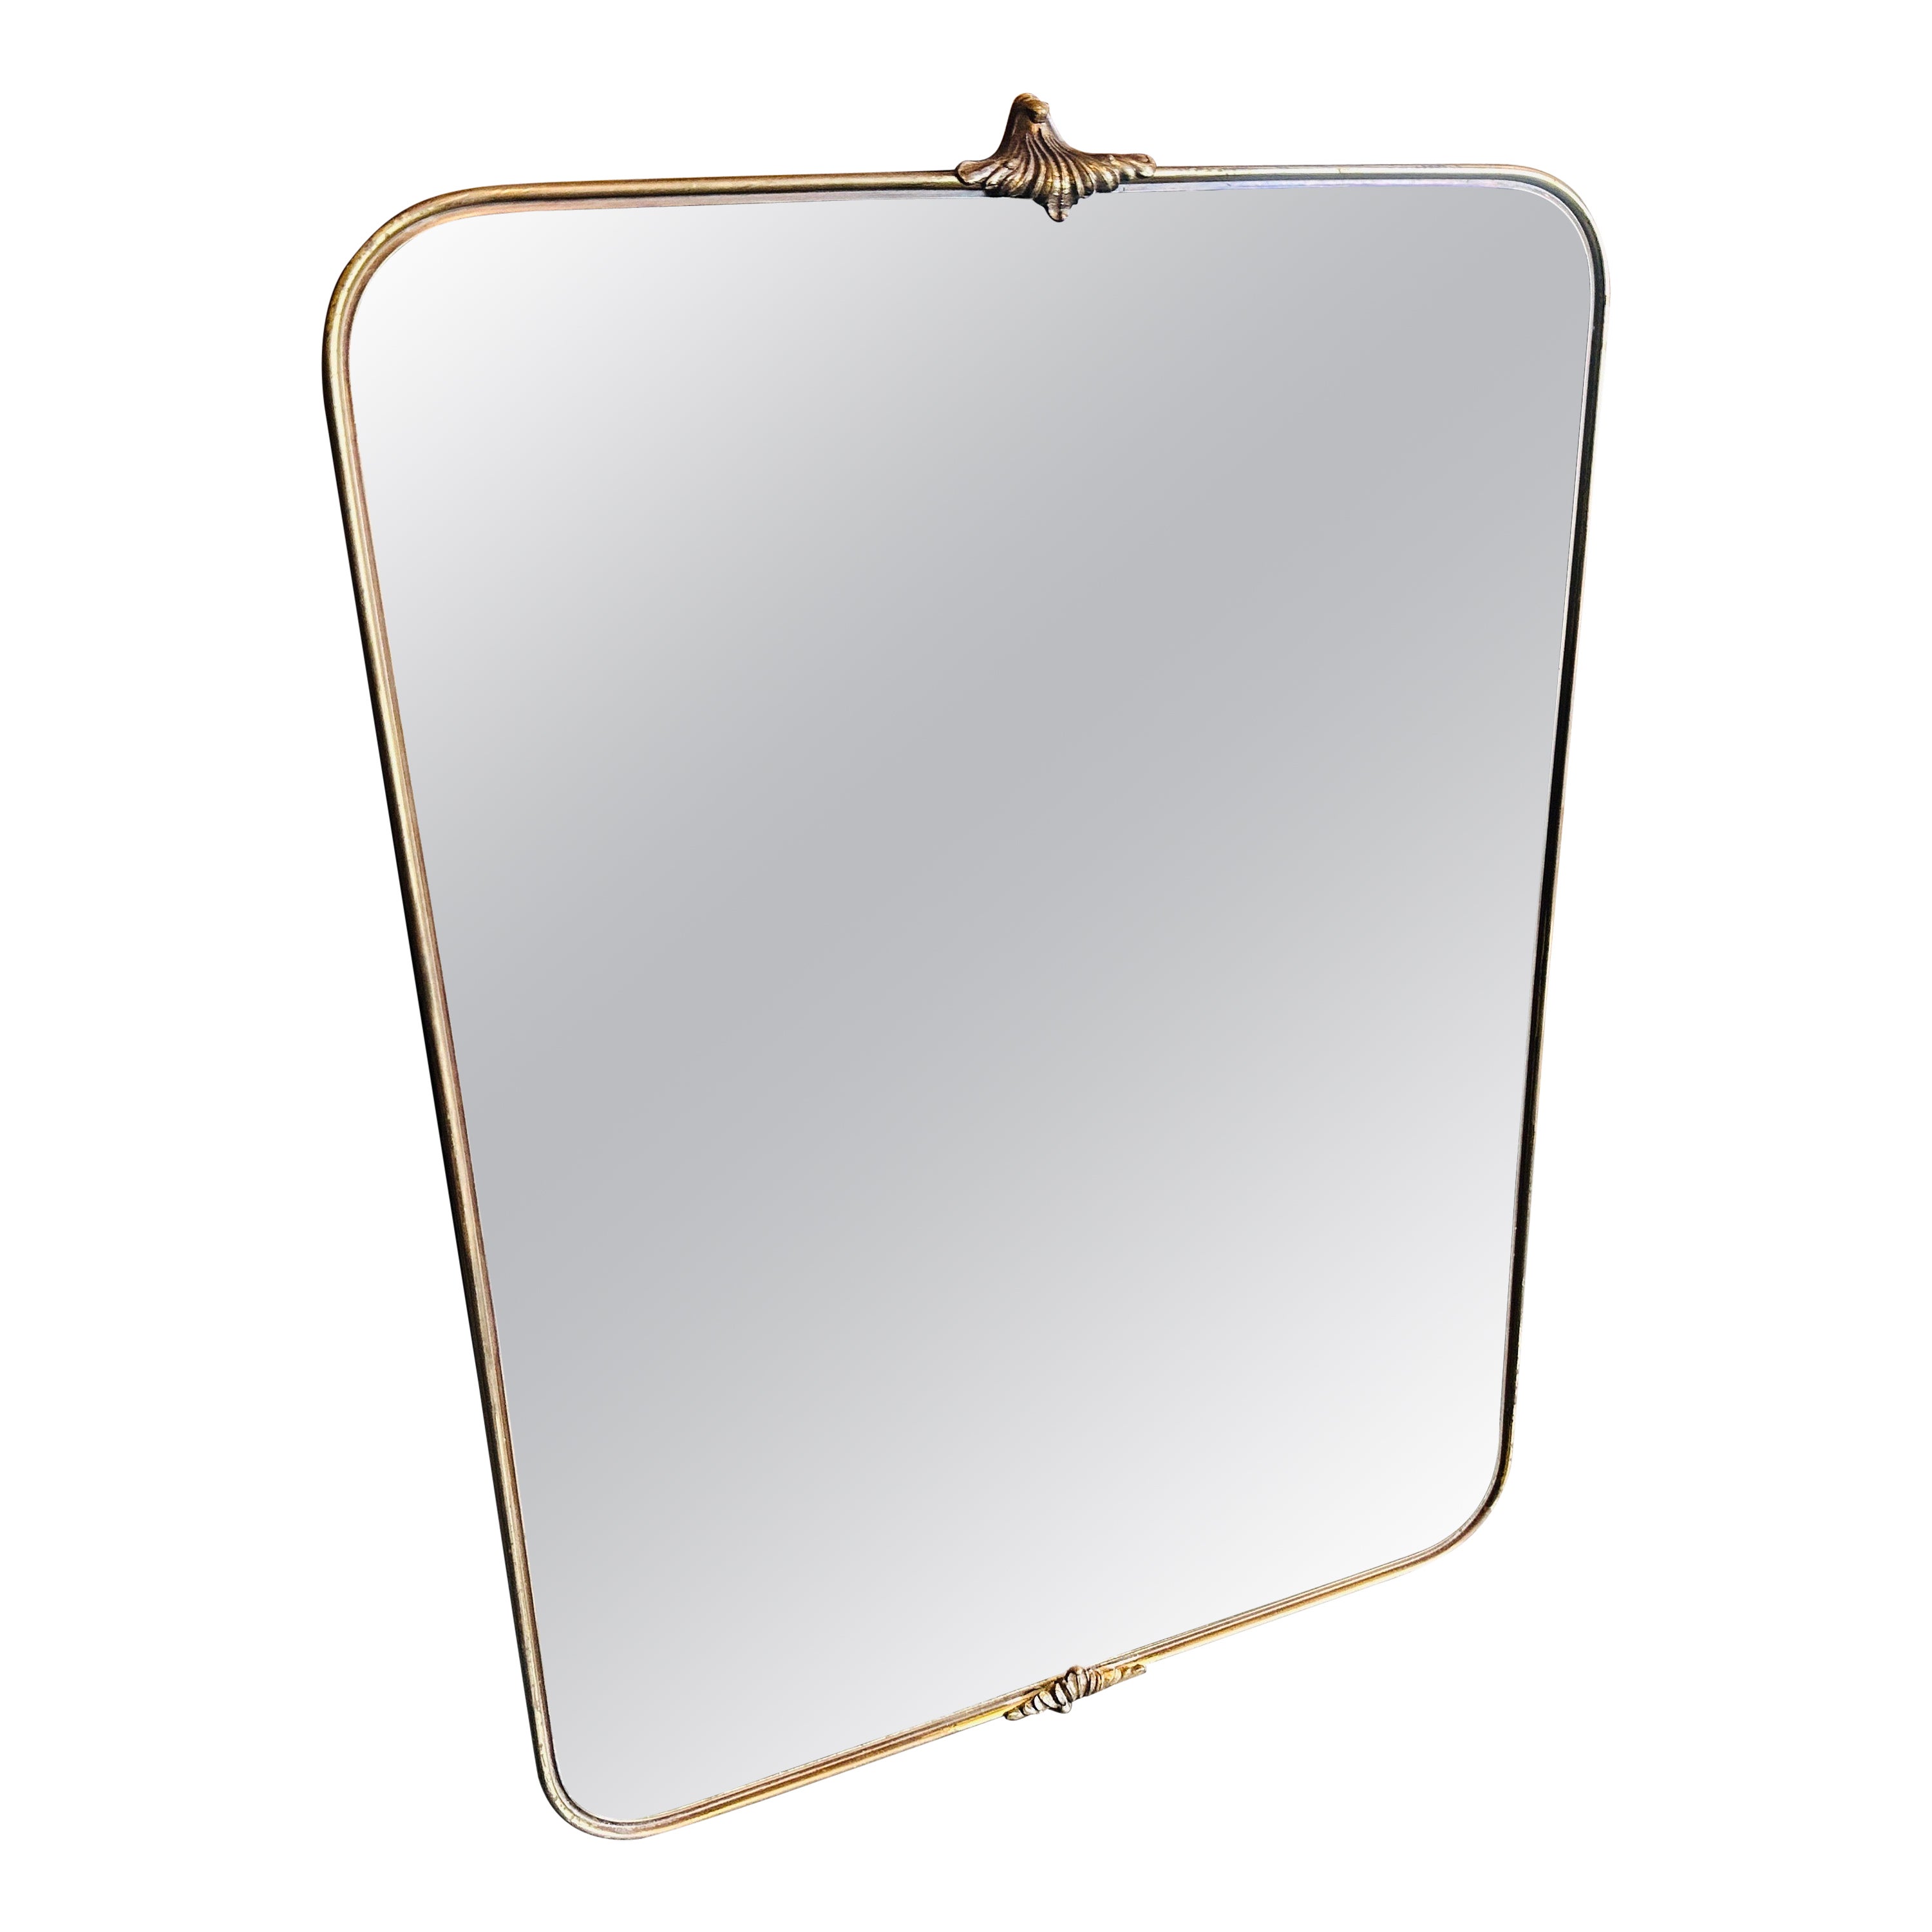 1950s Gio Ponti Style Mid-Century Modern Brass Rectangular Italian Wall Mirror For Sale